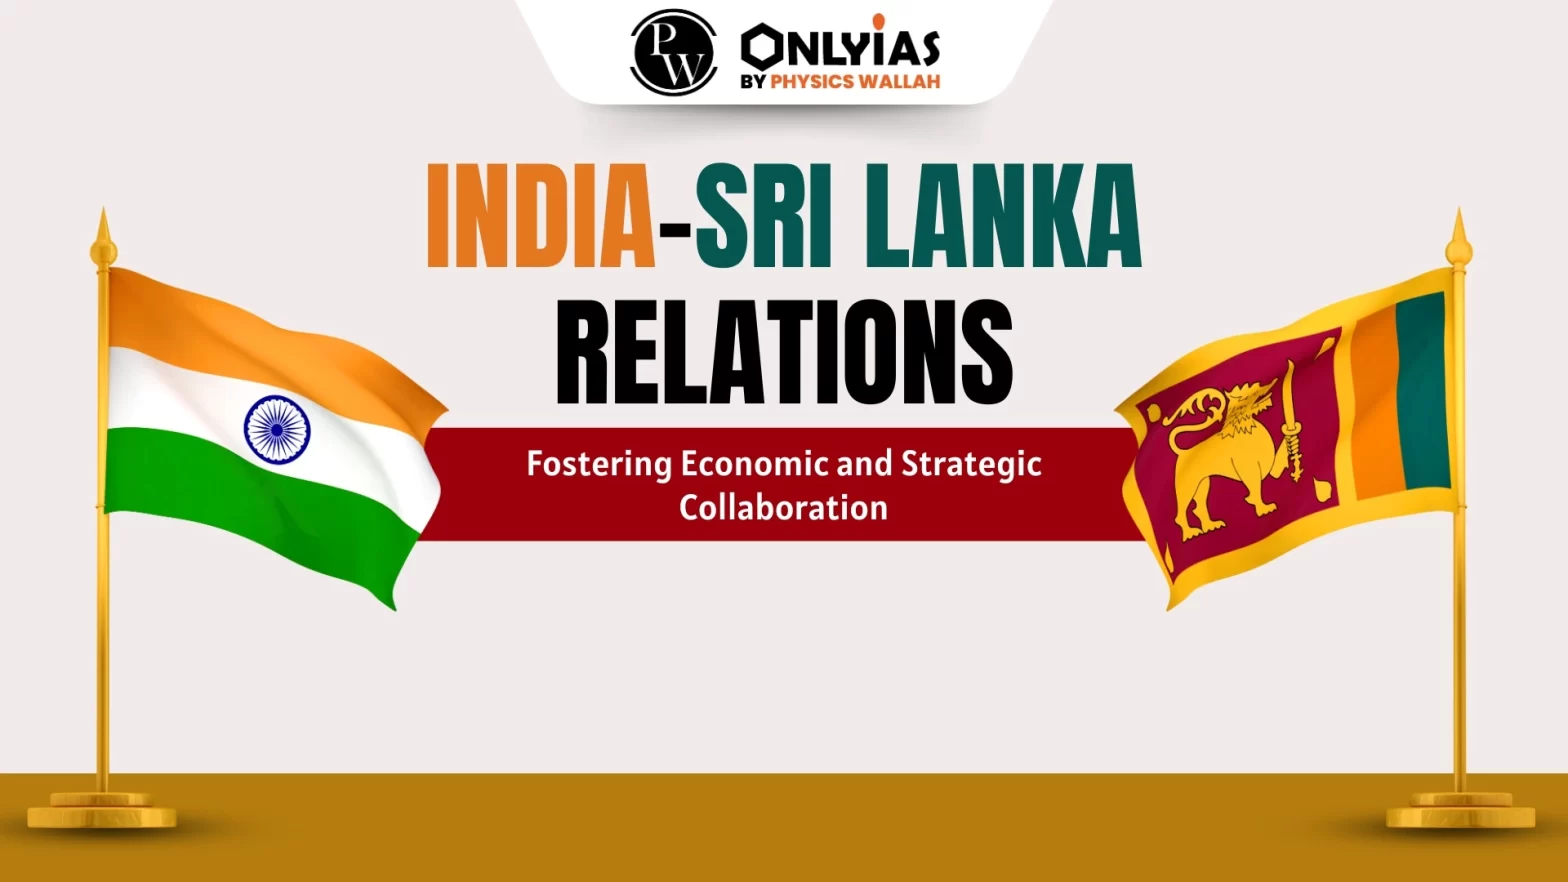 India-Sri Lanka Relations: Fostering Economic and Strategic Collaboration